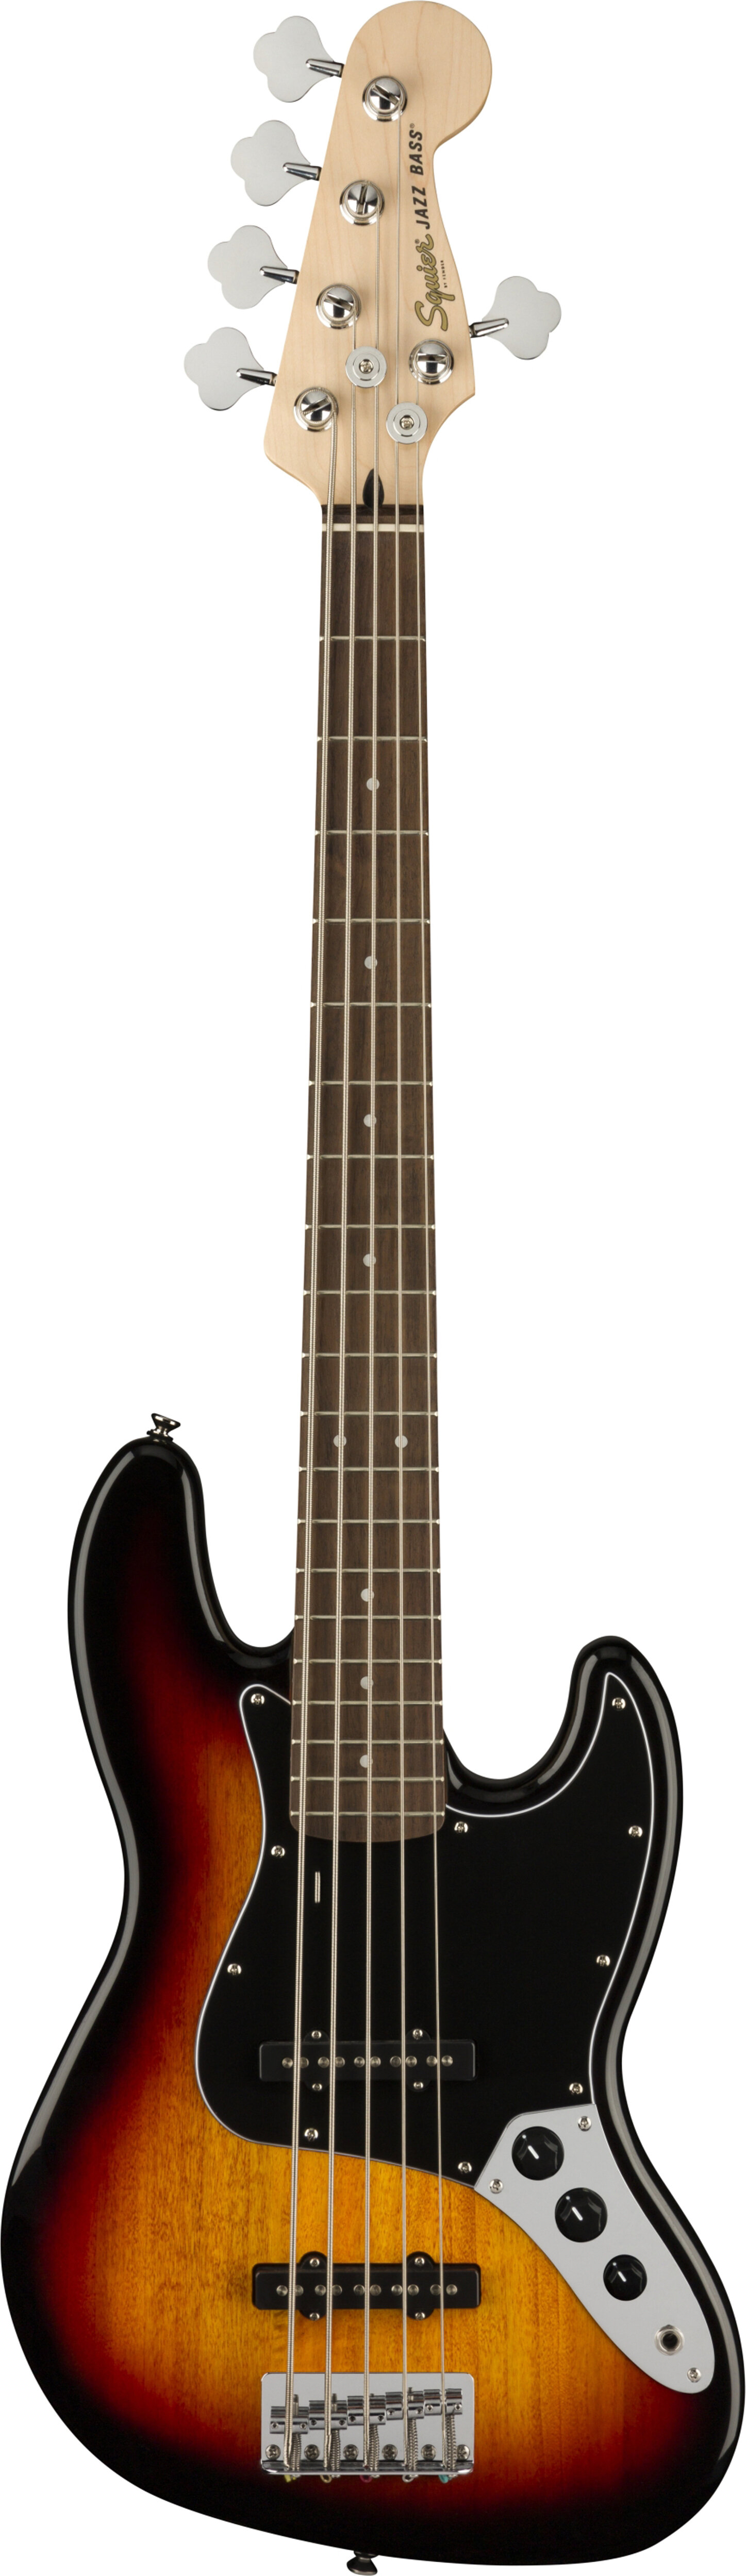 Squier Affinity Jazz Bass V 5 Strng LN 3 Color SB -  0378651500